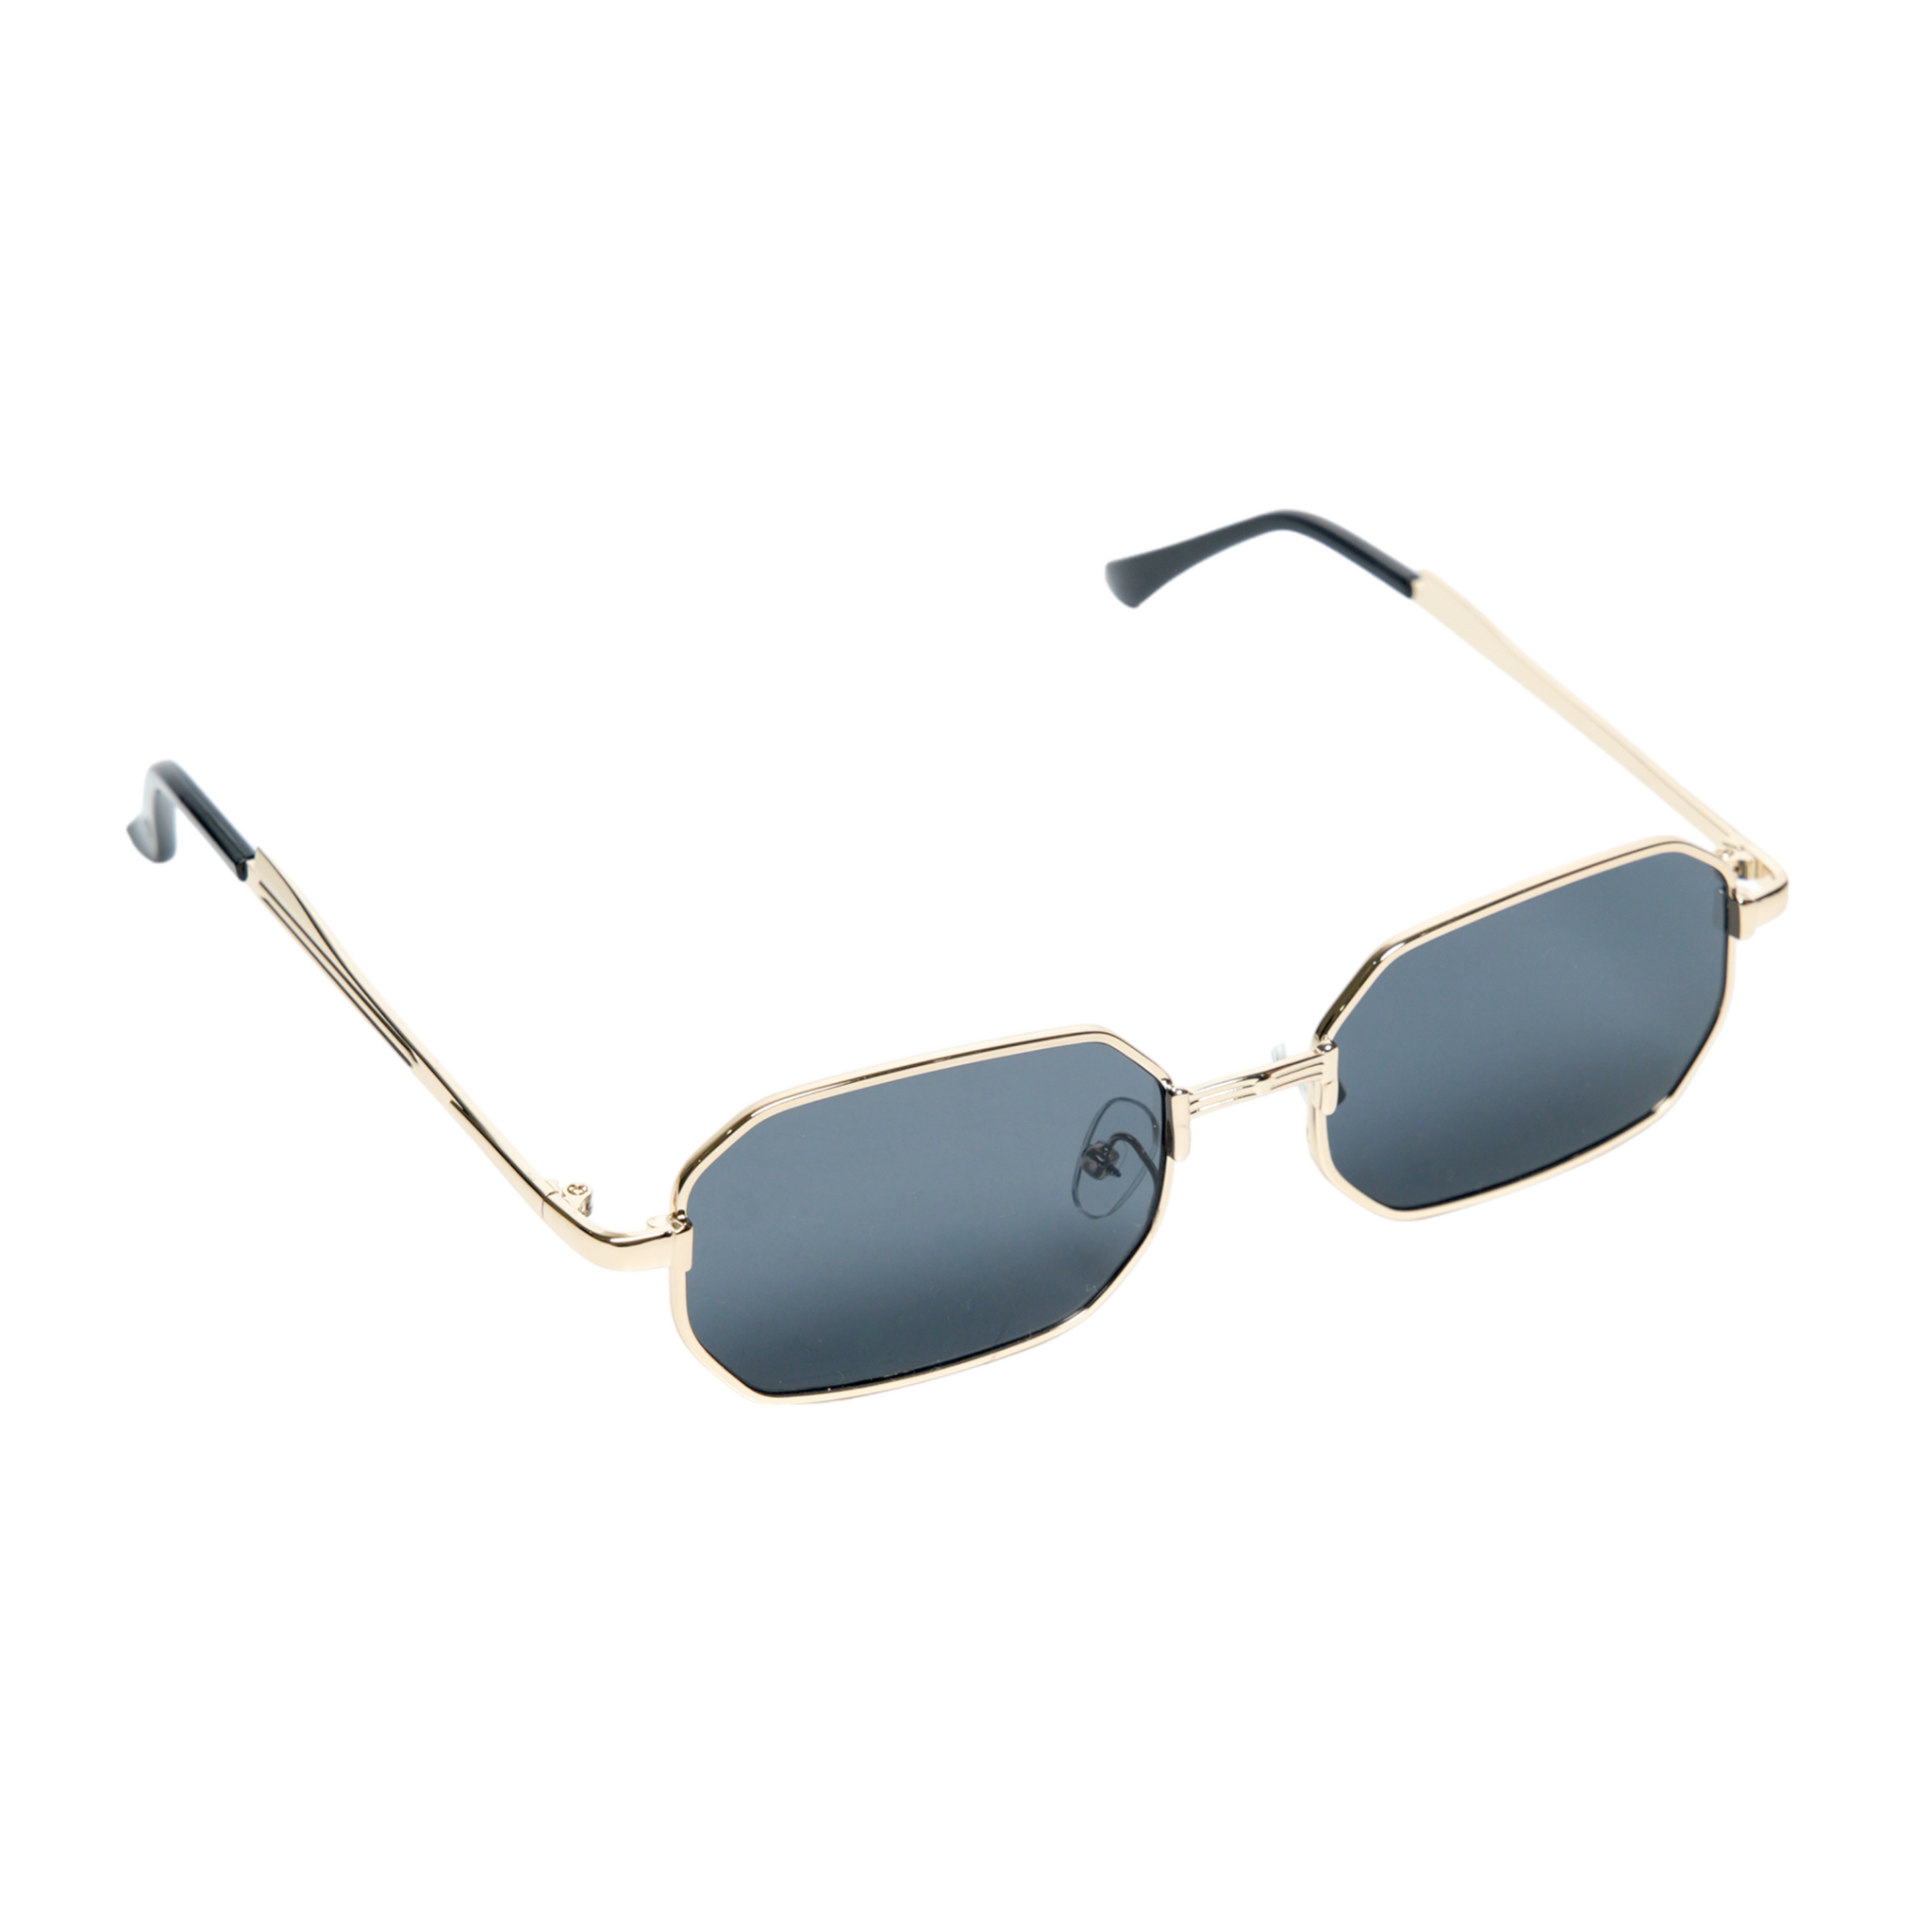 Chokore Rectangular Edgy Sunglasses (Black & Gold)